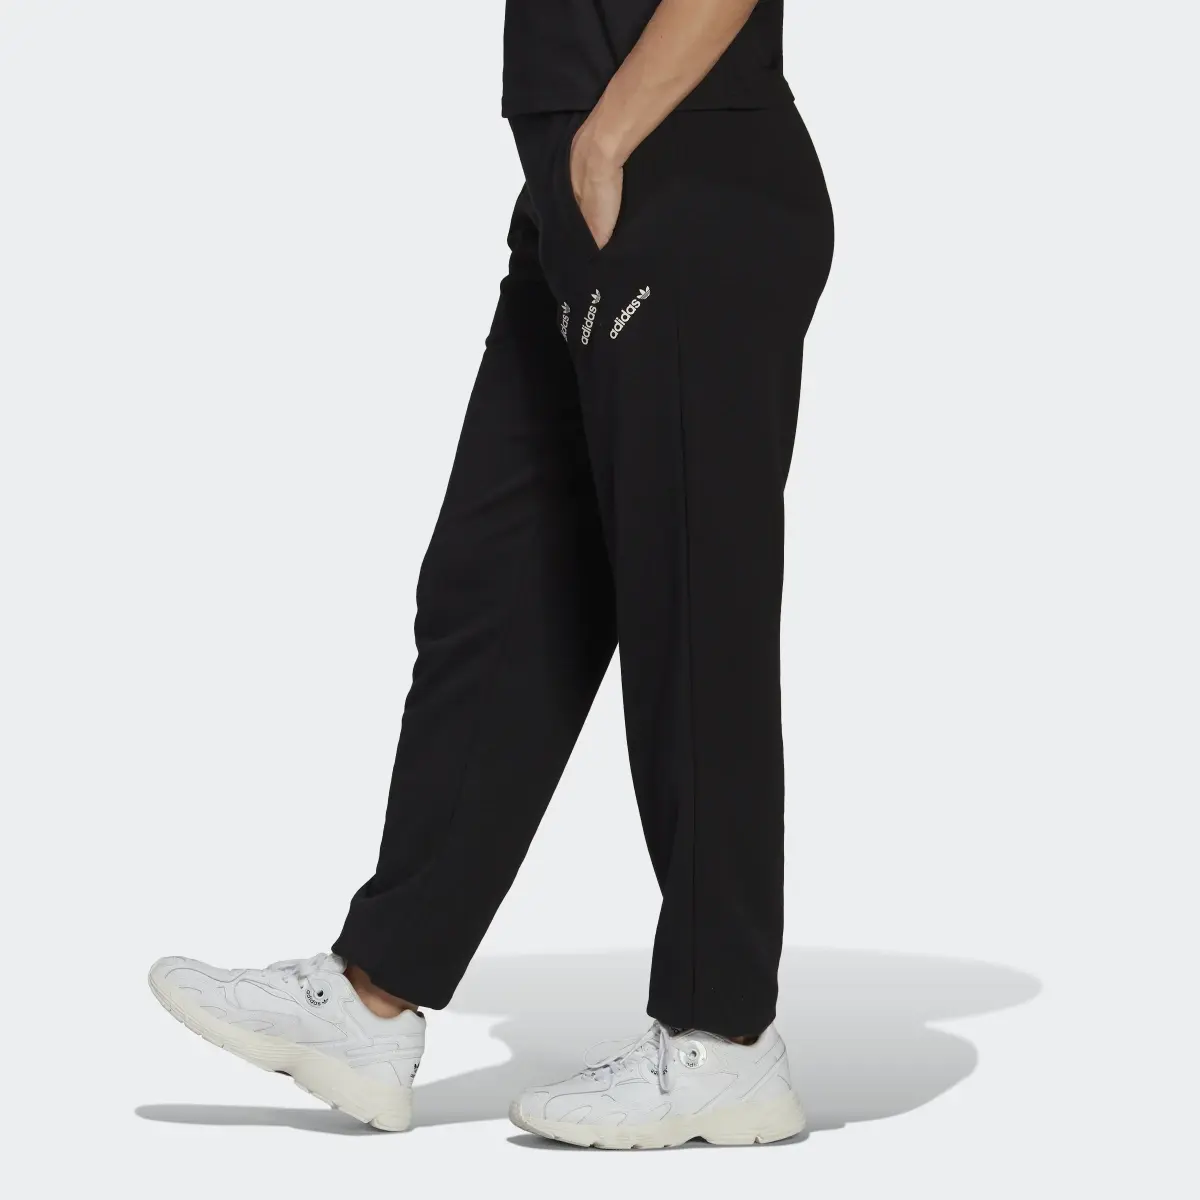 Adidas Track pants. 2